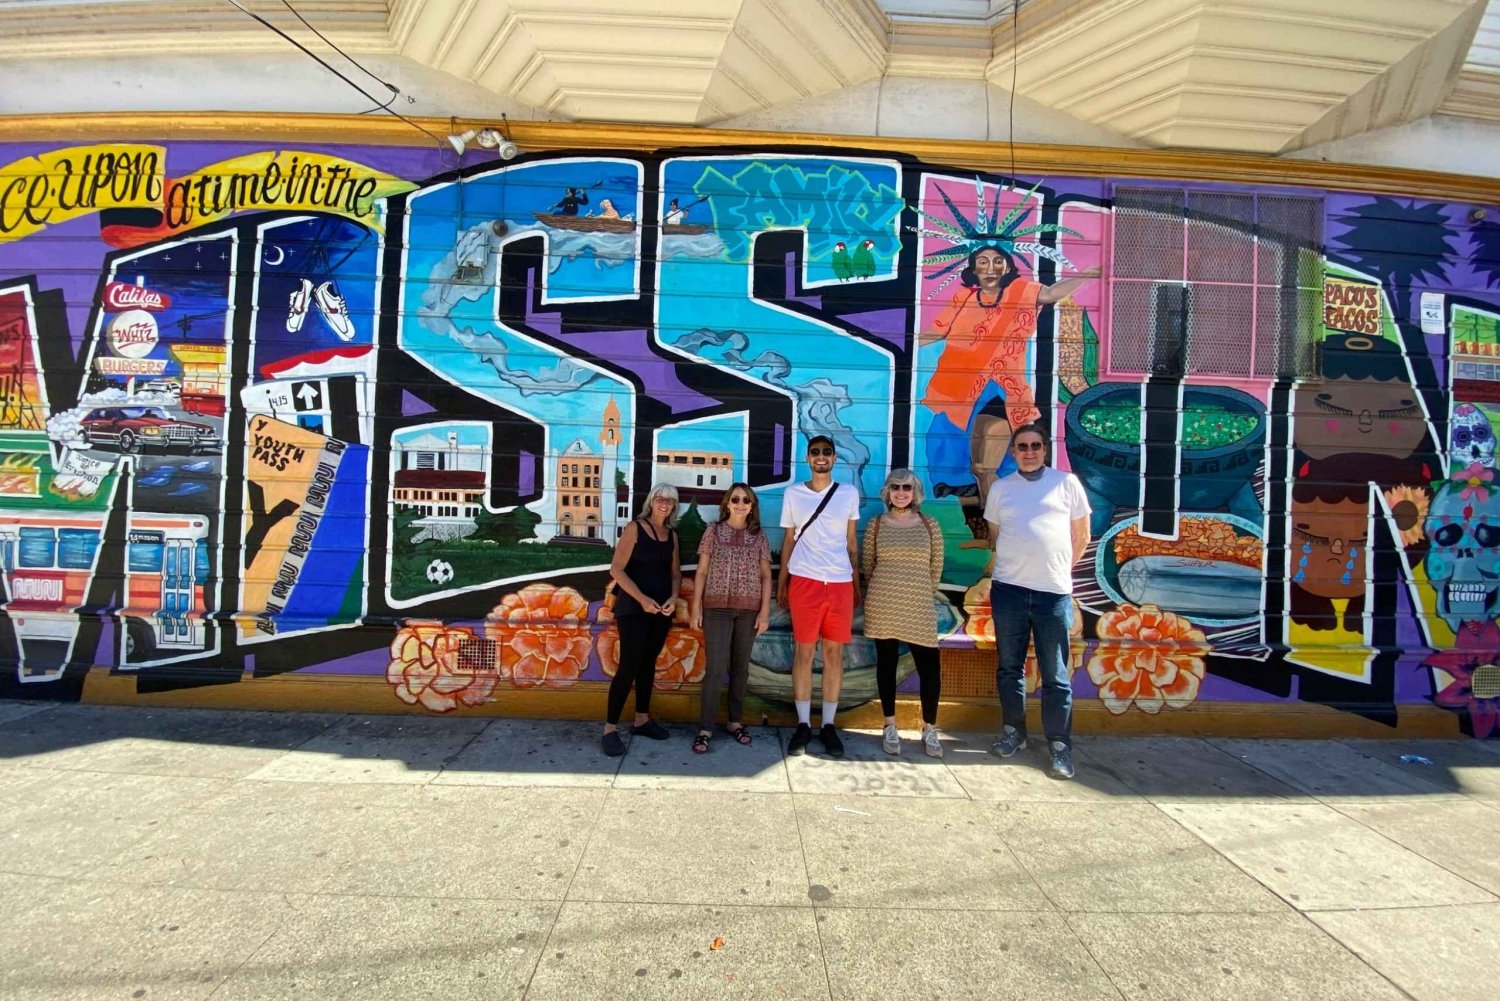 San Francisco: Mission District Food and Culture Tour